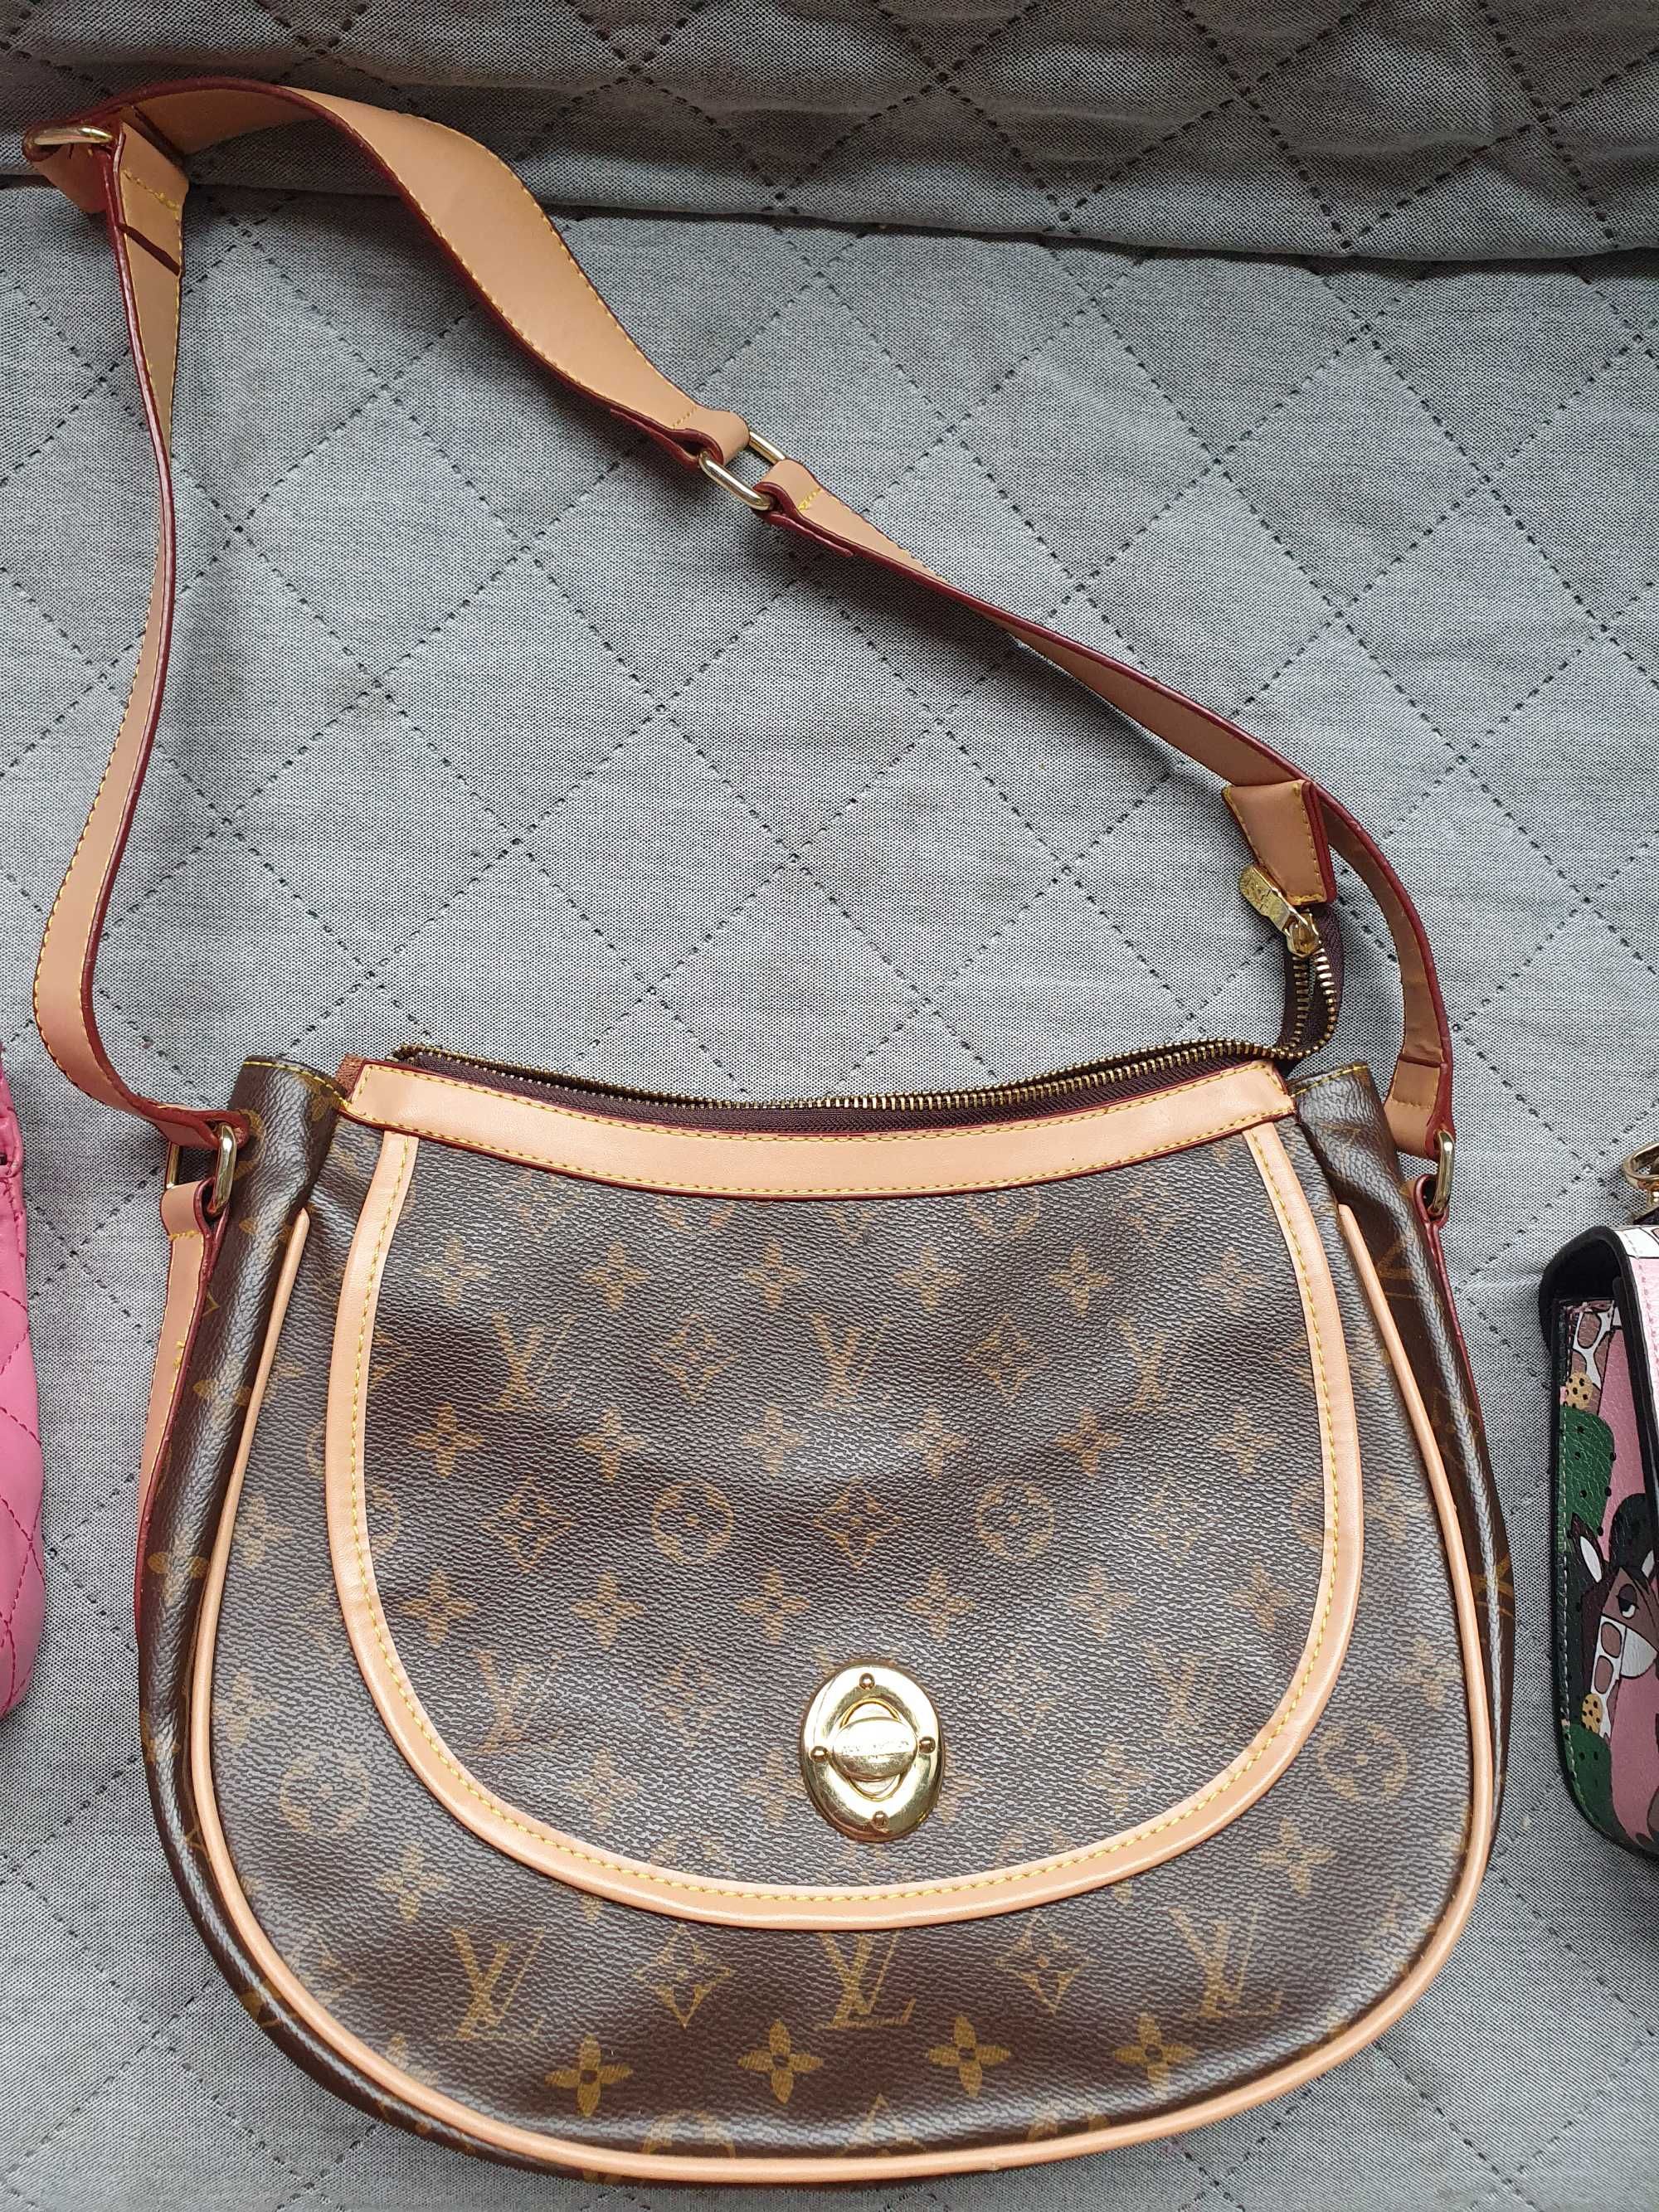 Чанти Chanel, Furla, Louis Vuitton